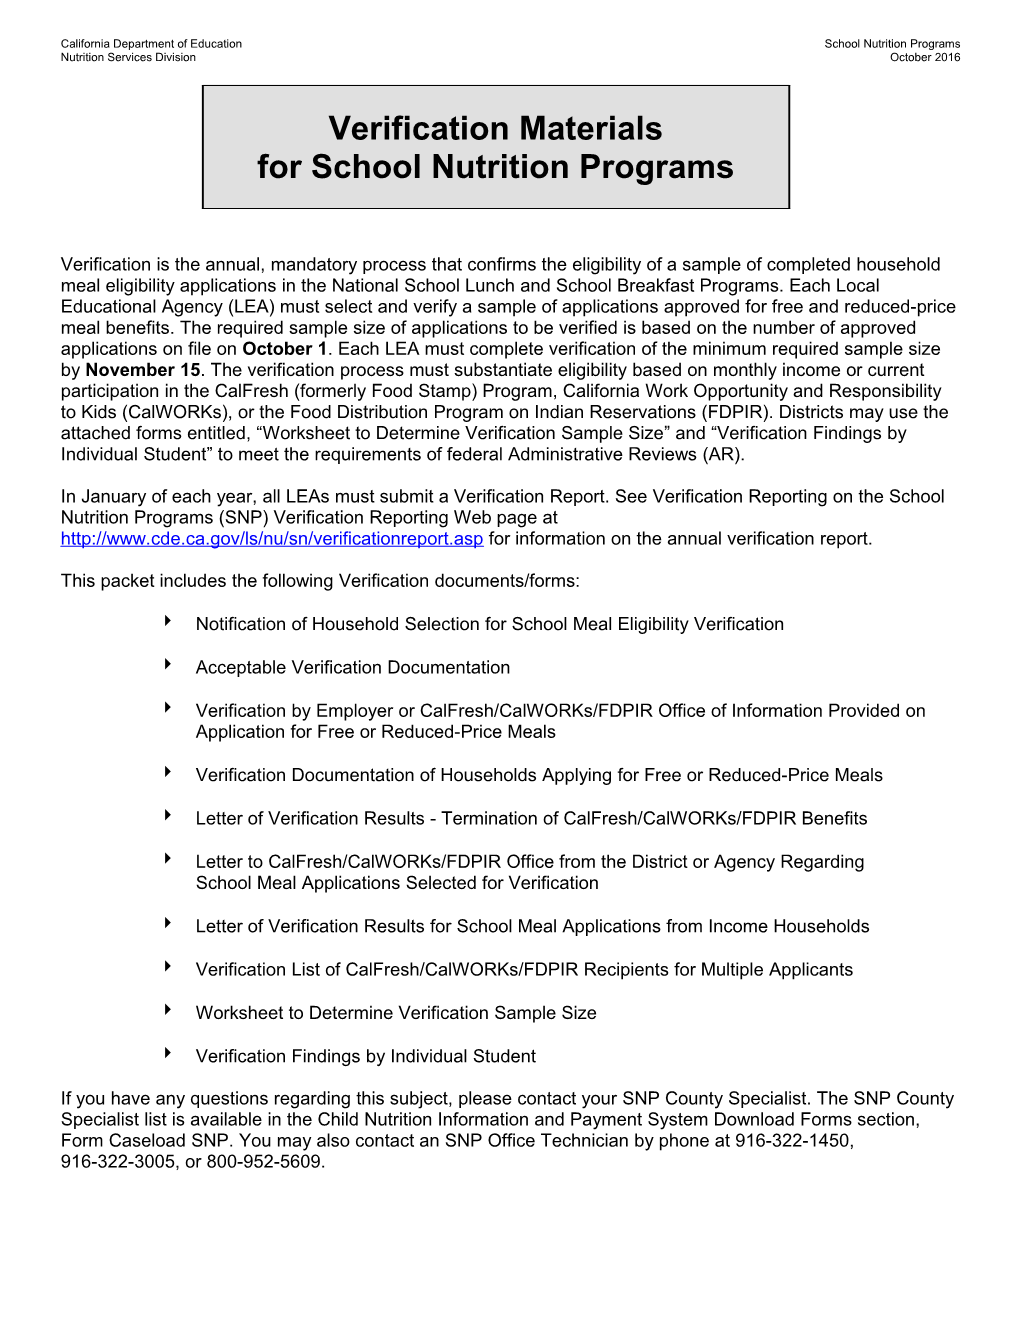 Verification Materials for SNP - School Nutrition (CA Dept of Education)